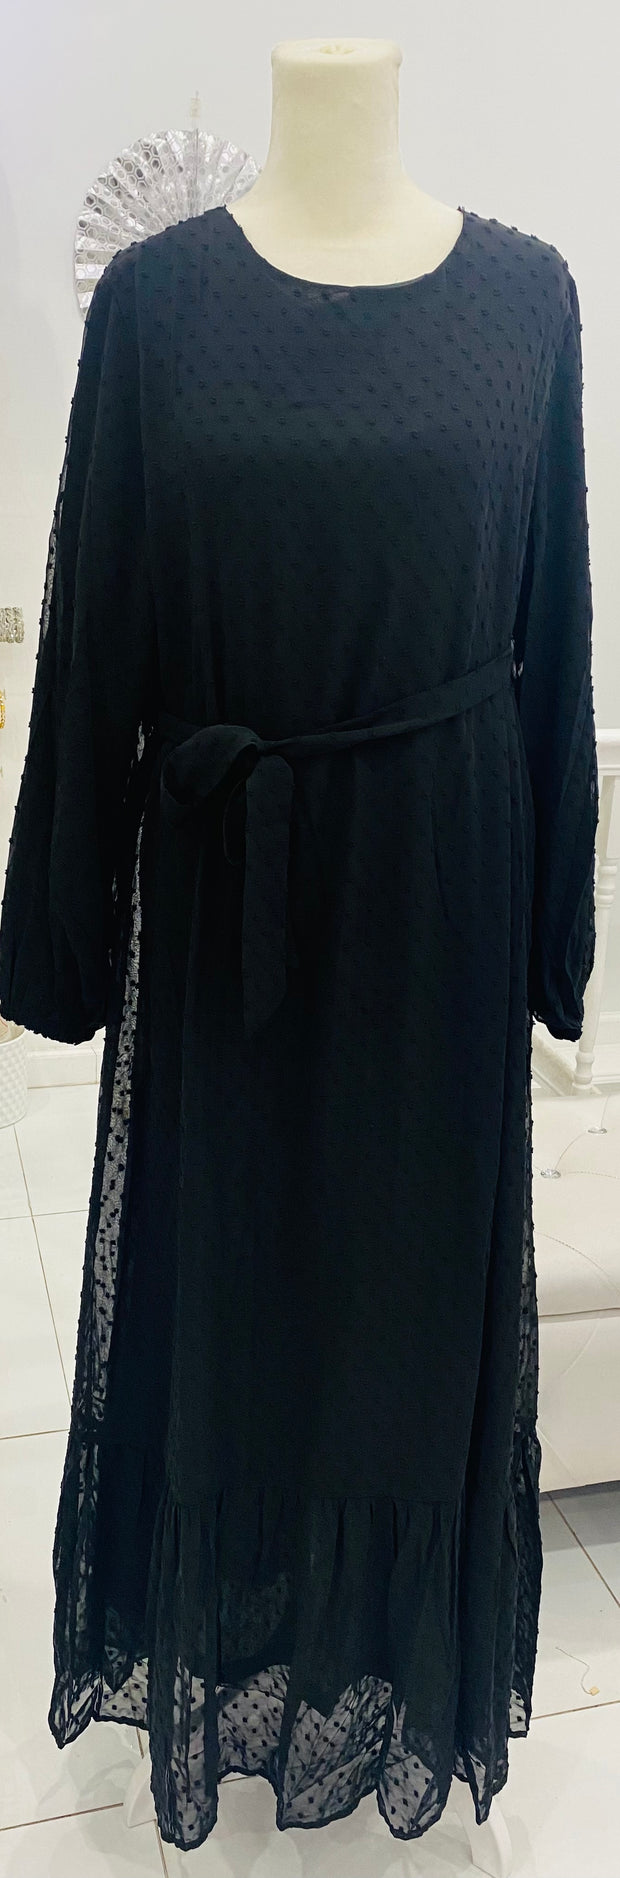 Simi Black Dotted Dress